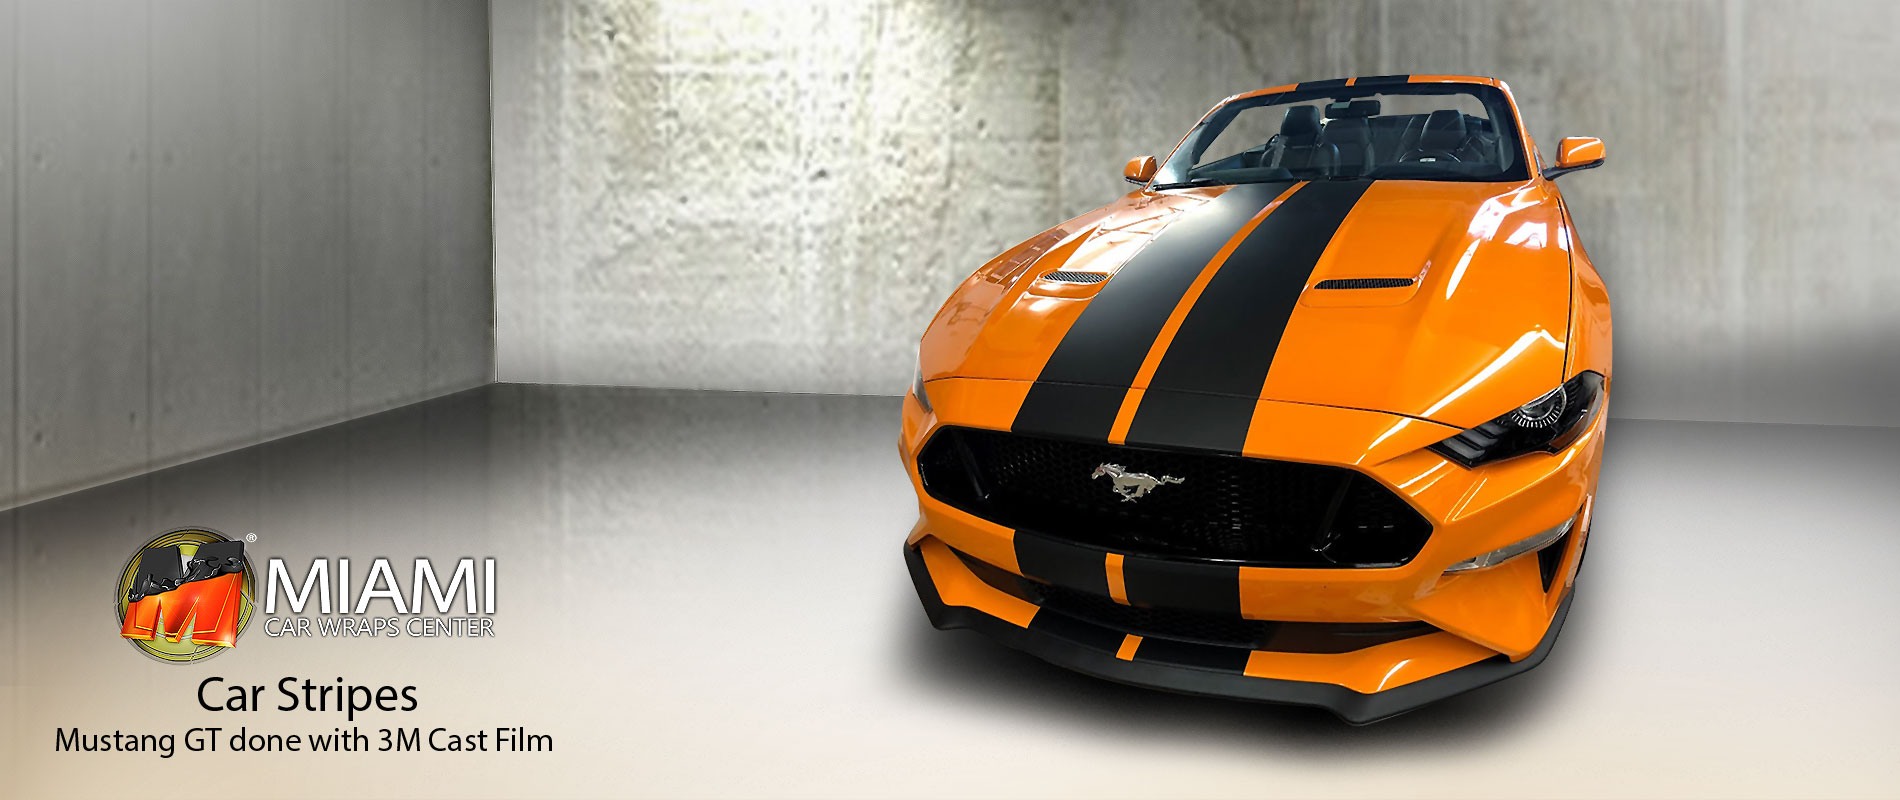 Mustang Gt car stripes